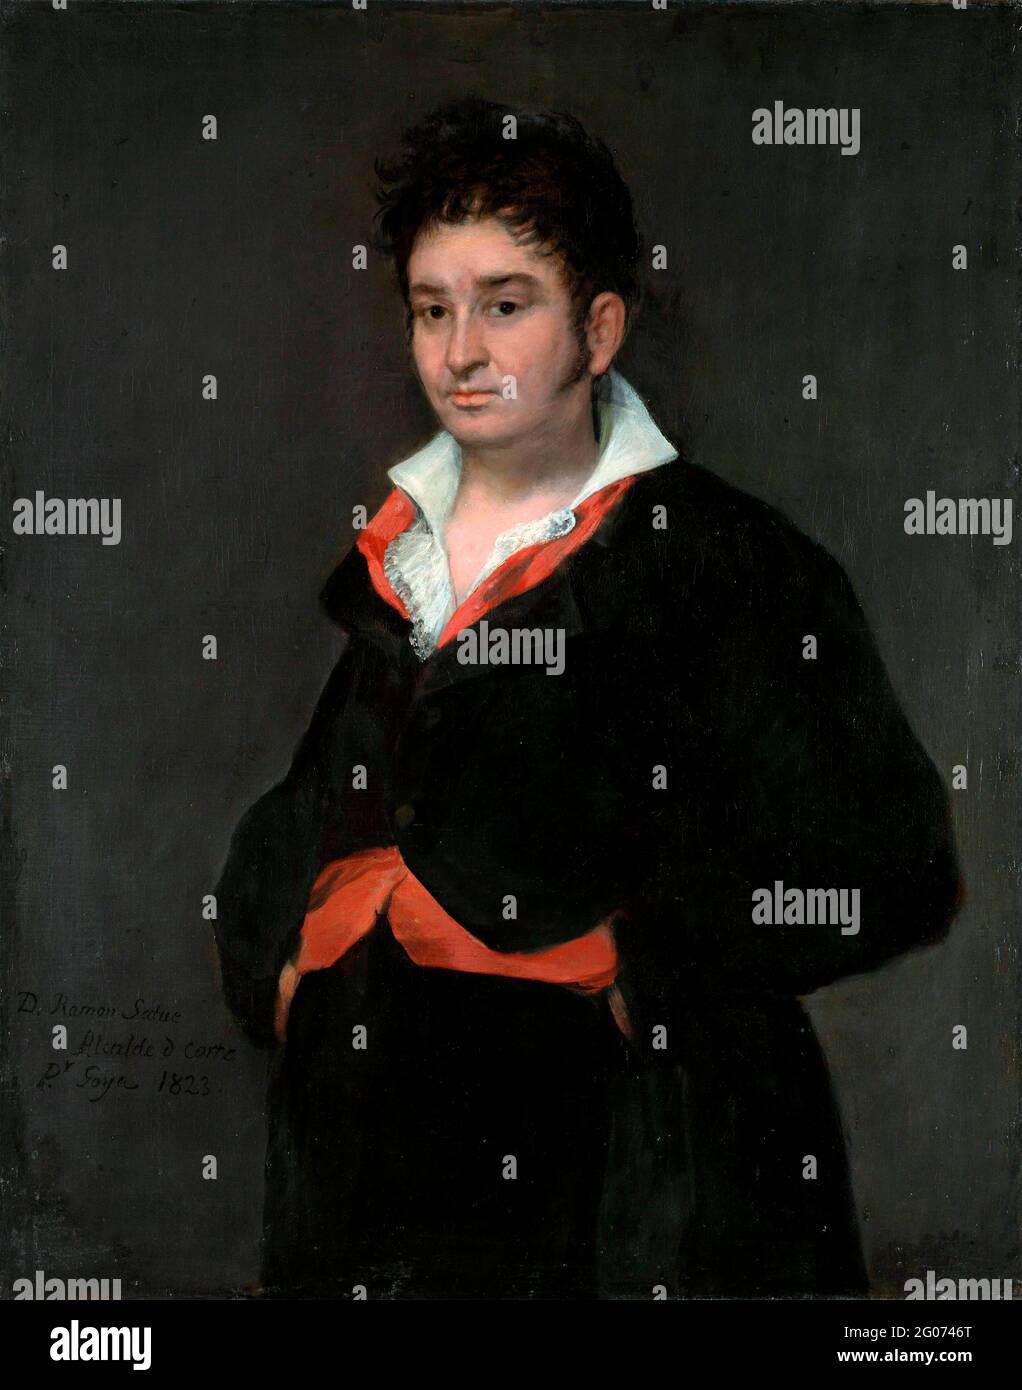 Goya. Portrait of Don Ramón Satué by Francisco José de Goya y Lucientes (1746-1828), oil on canvas, 1823 Stock Photo